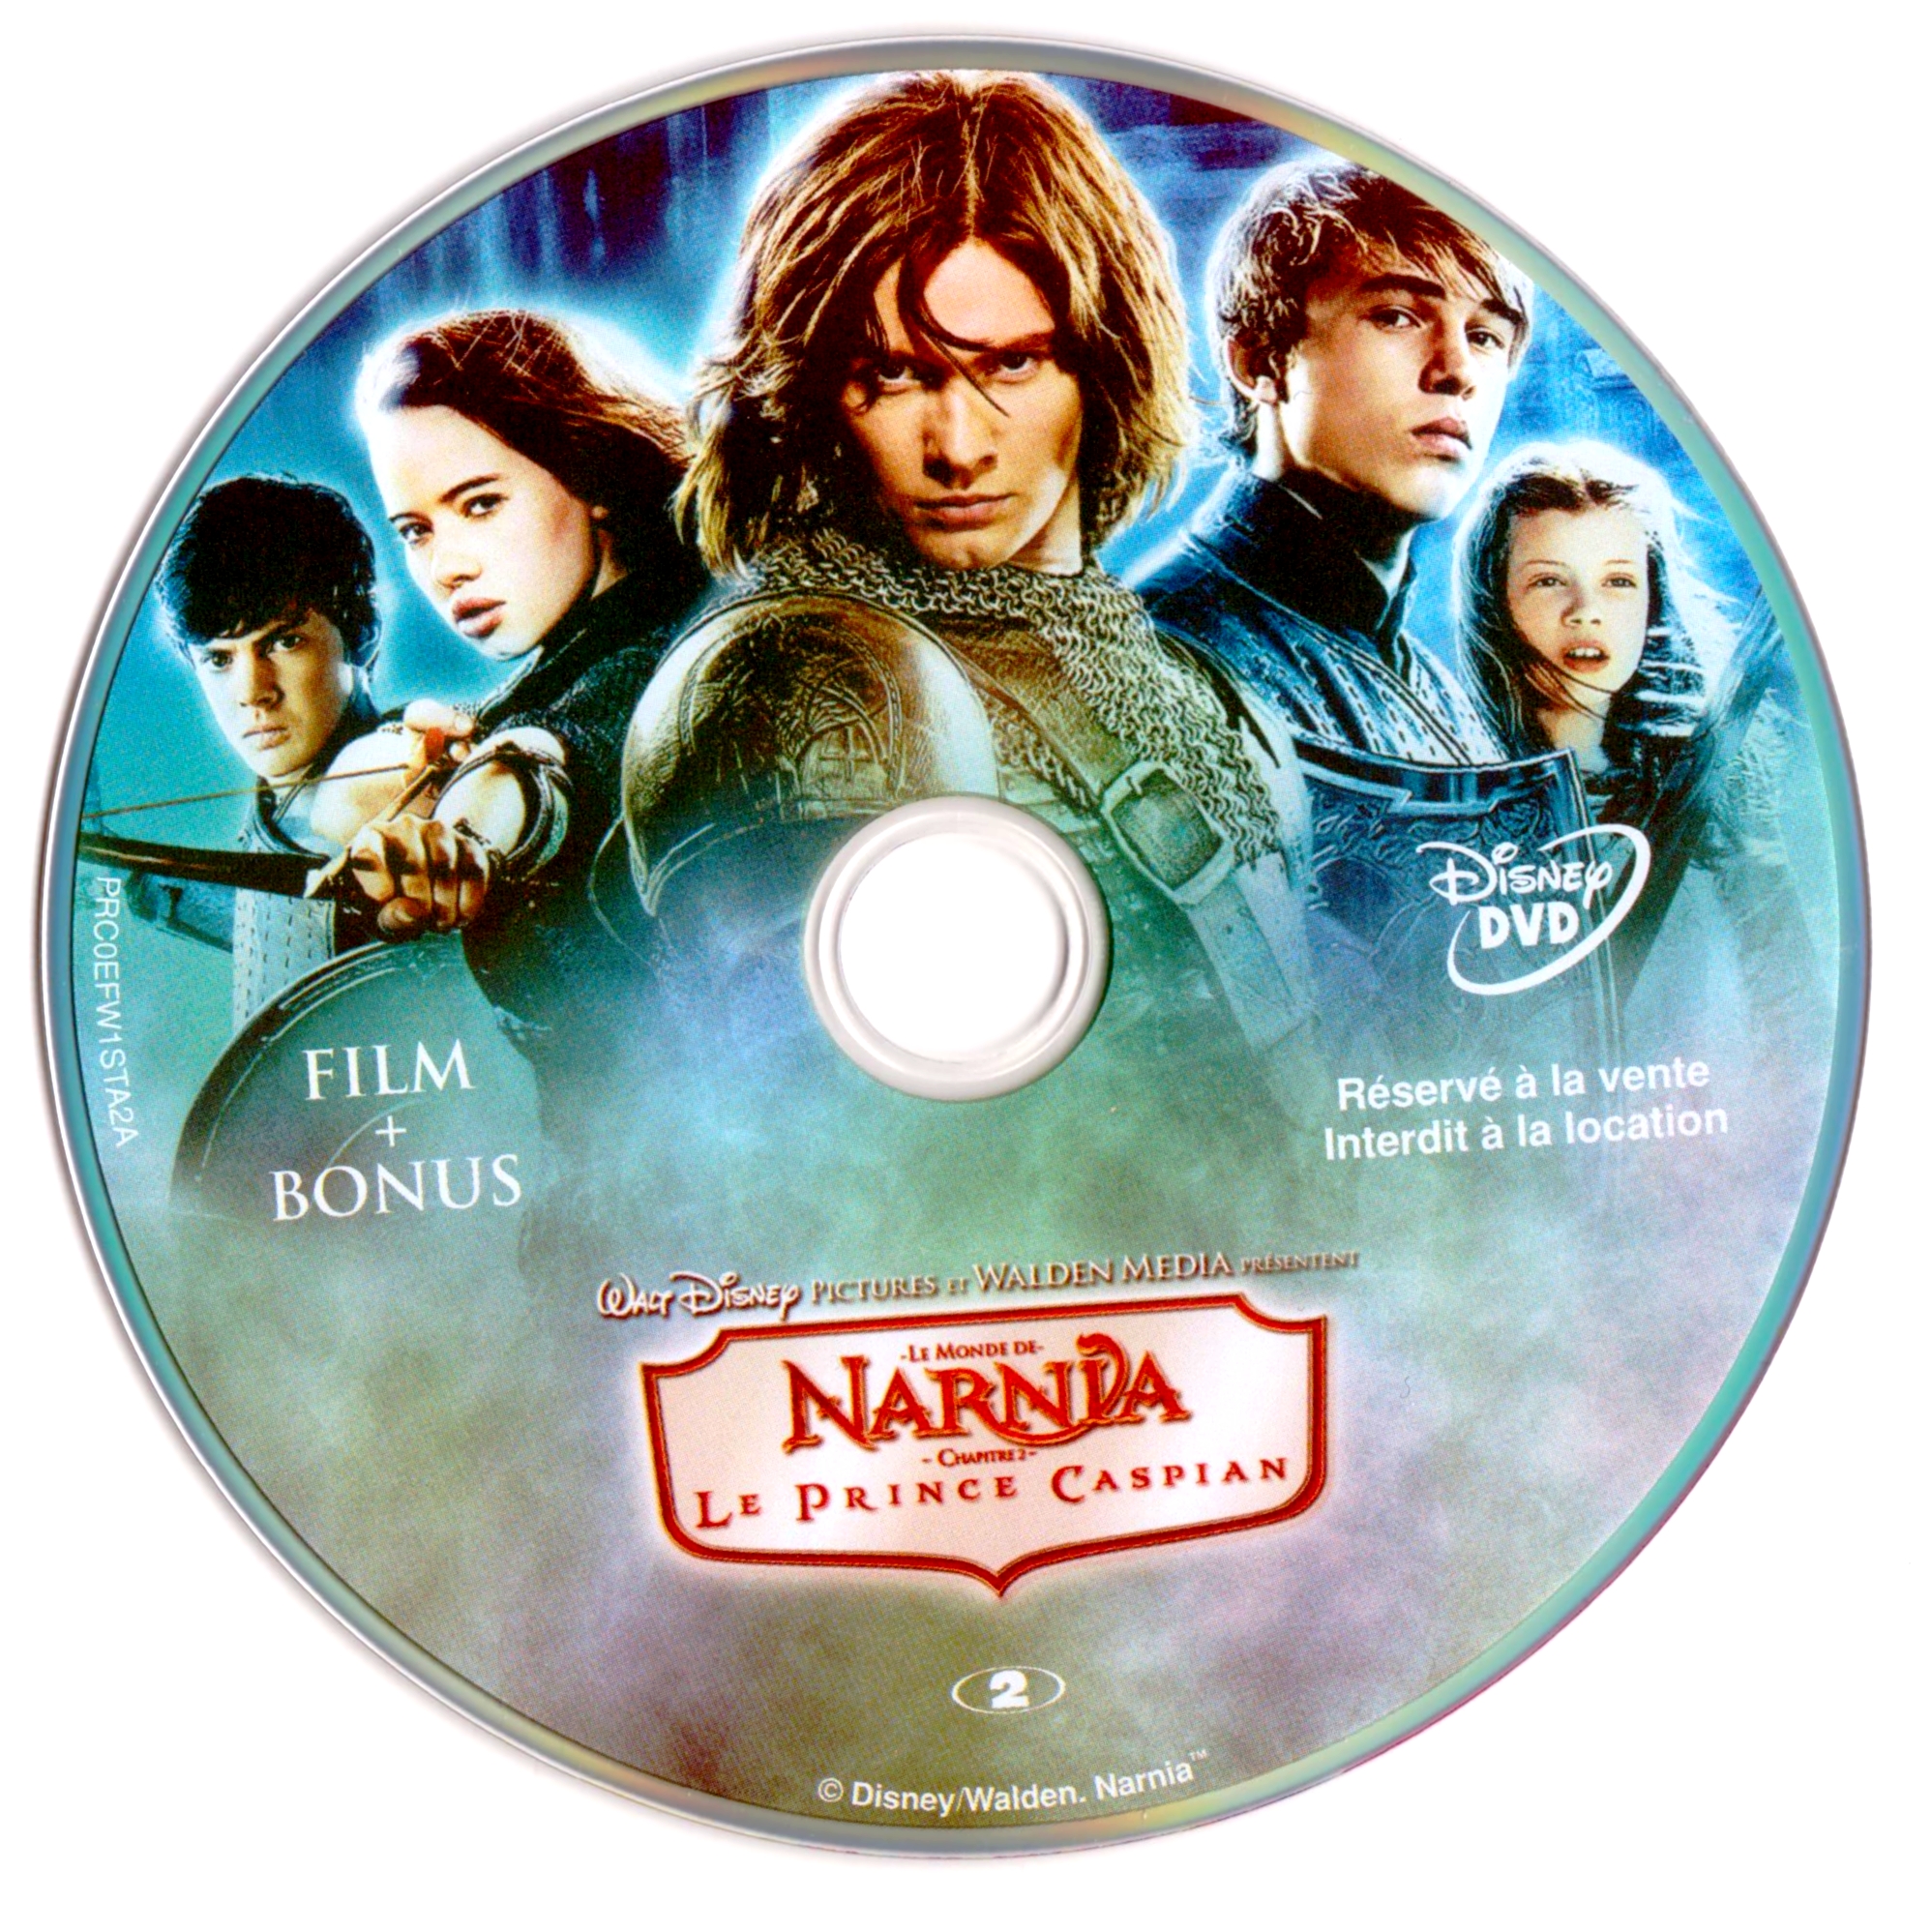 Le Monde de Narnia chapitre 2 - Prince Caspian v2